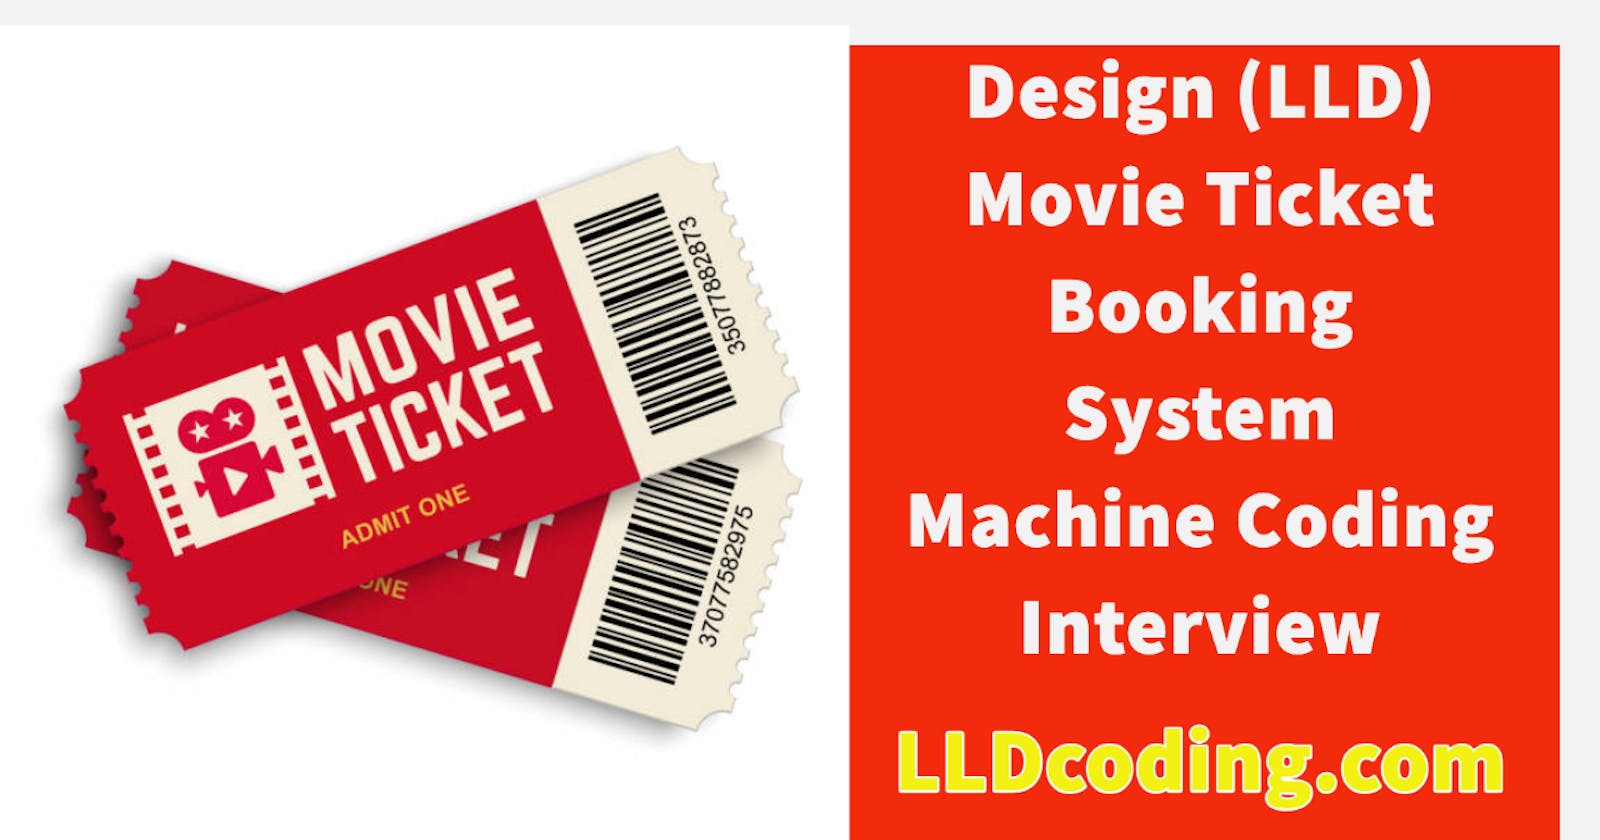 Design (LLD) a Movie Ticket Booking System - Machine Coding